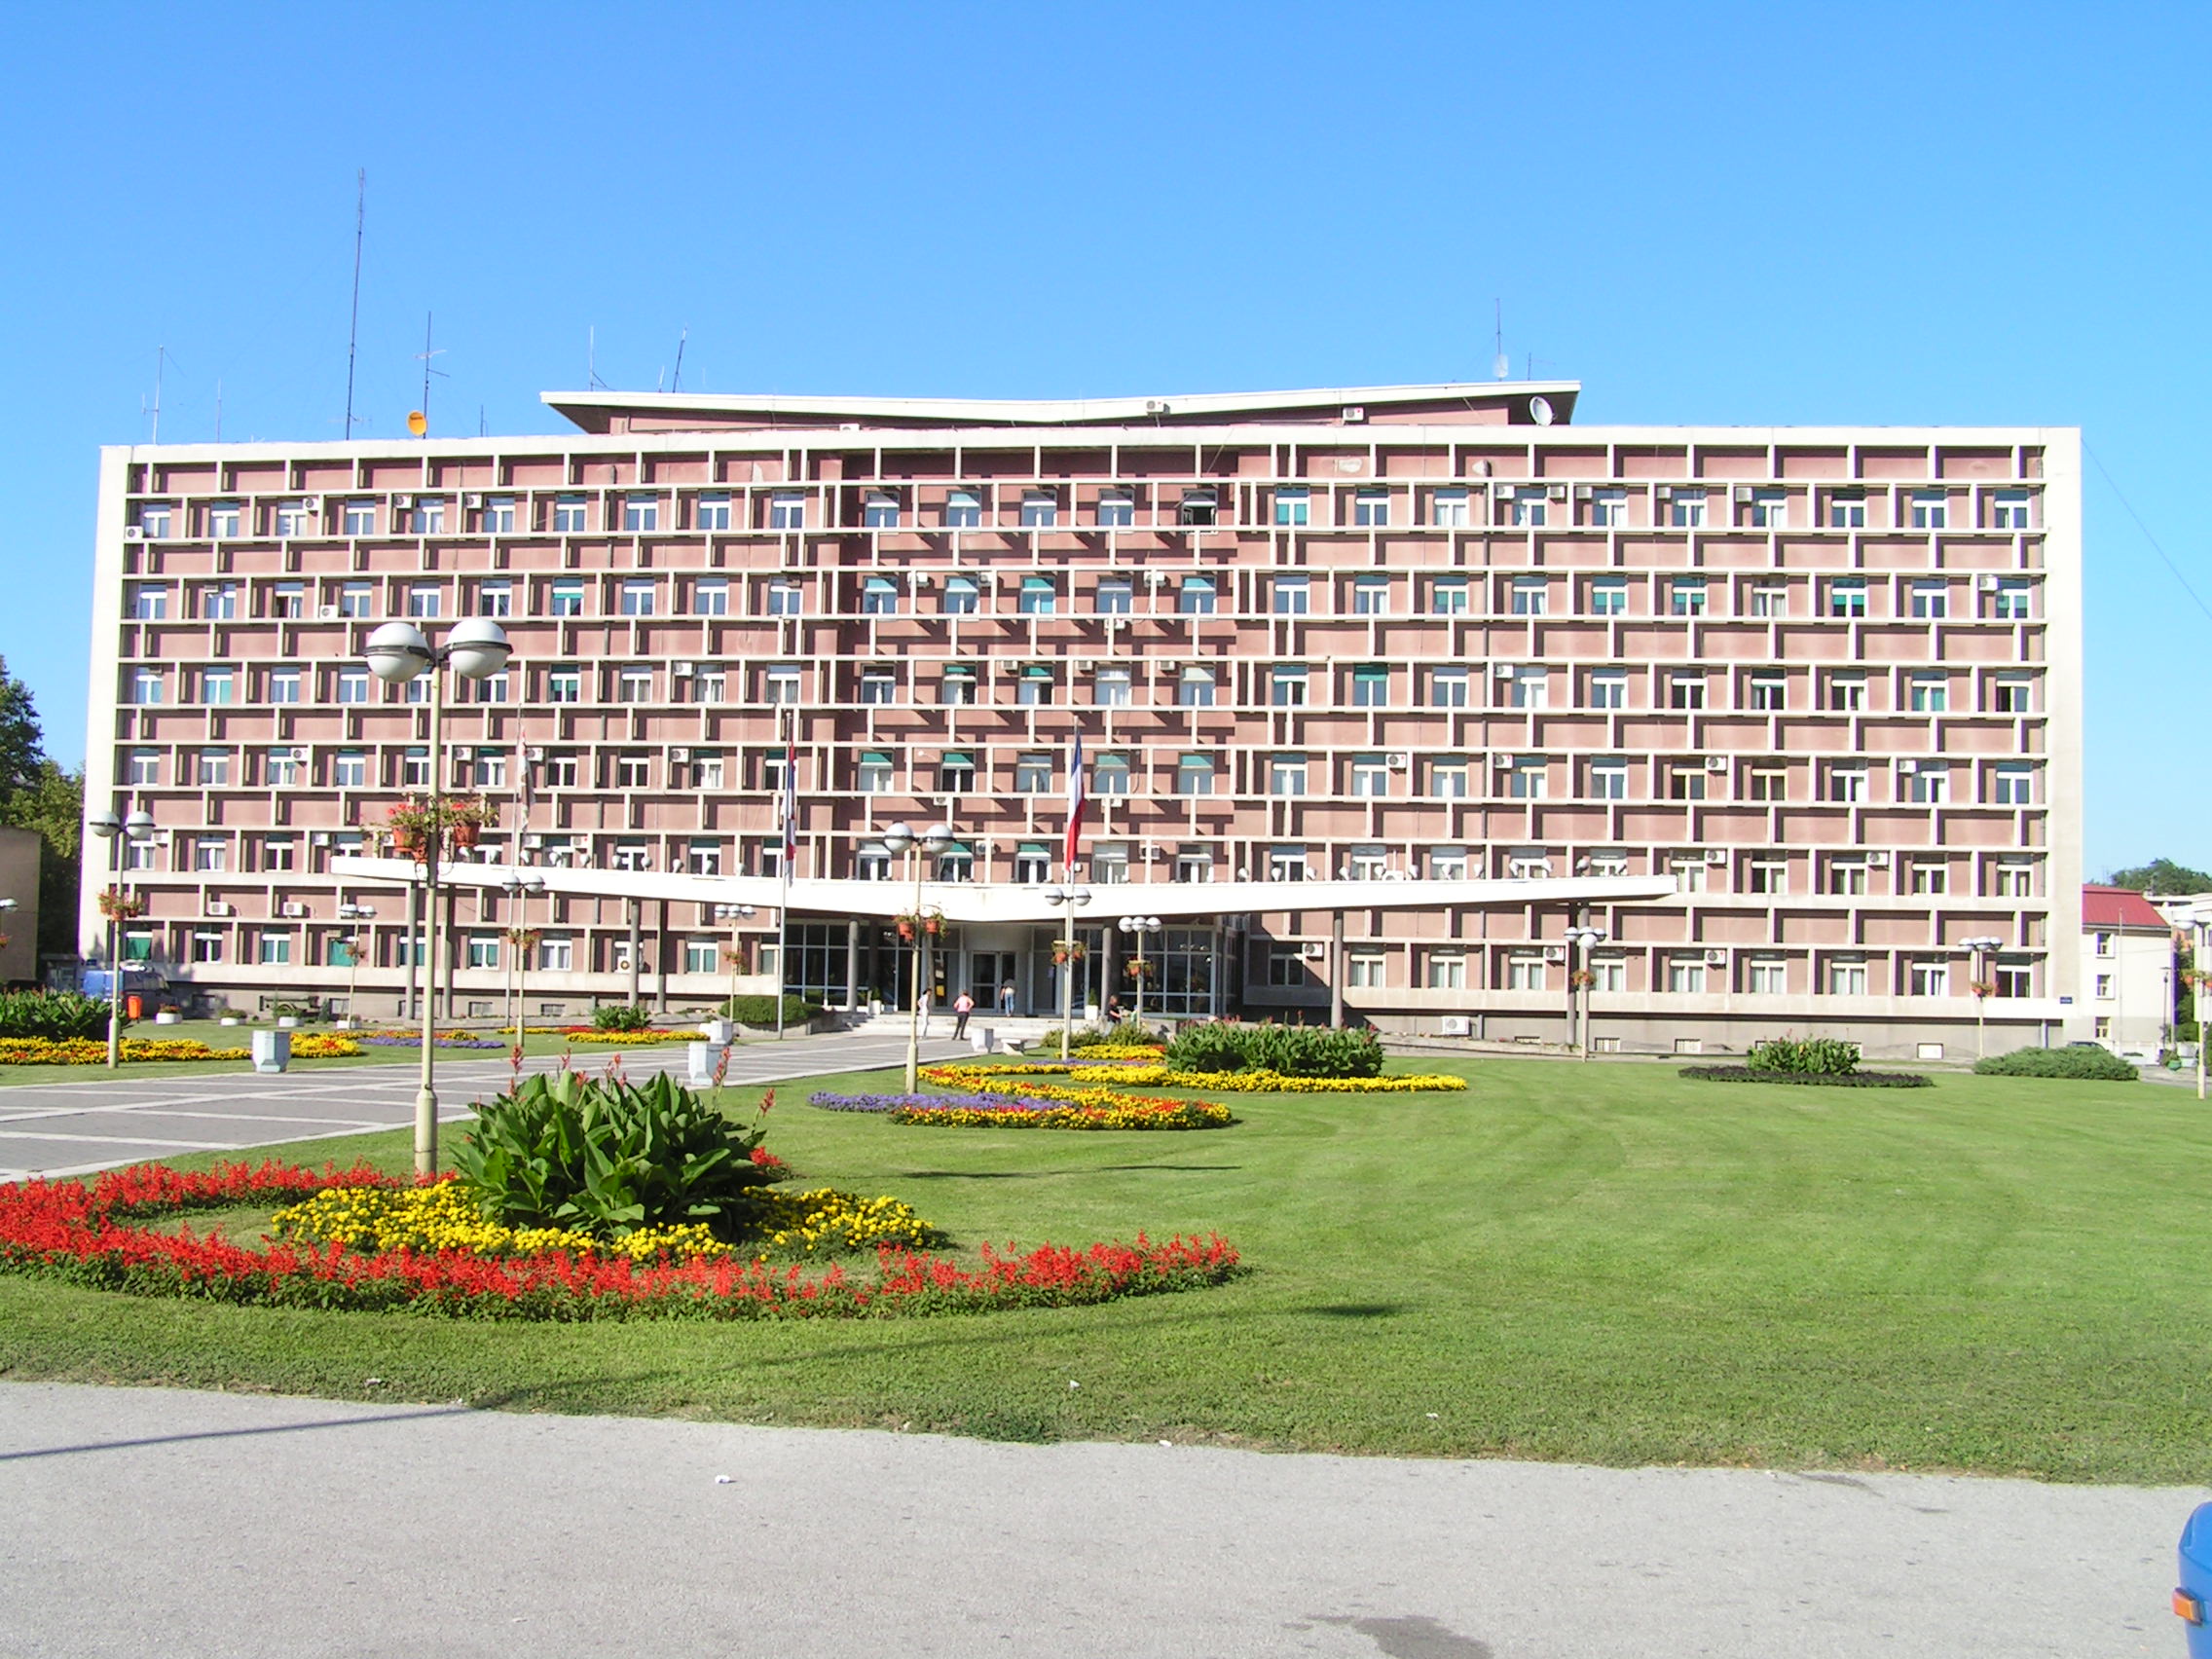 City Hall of Kragujevac